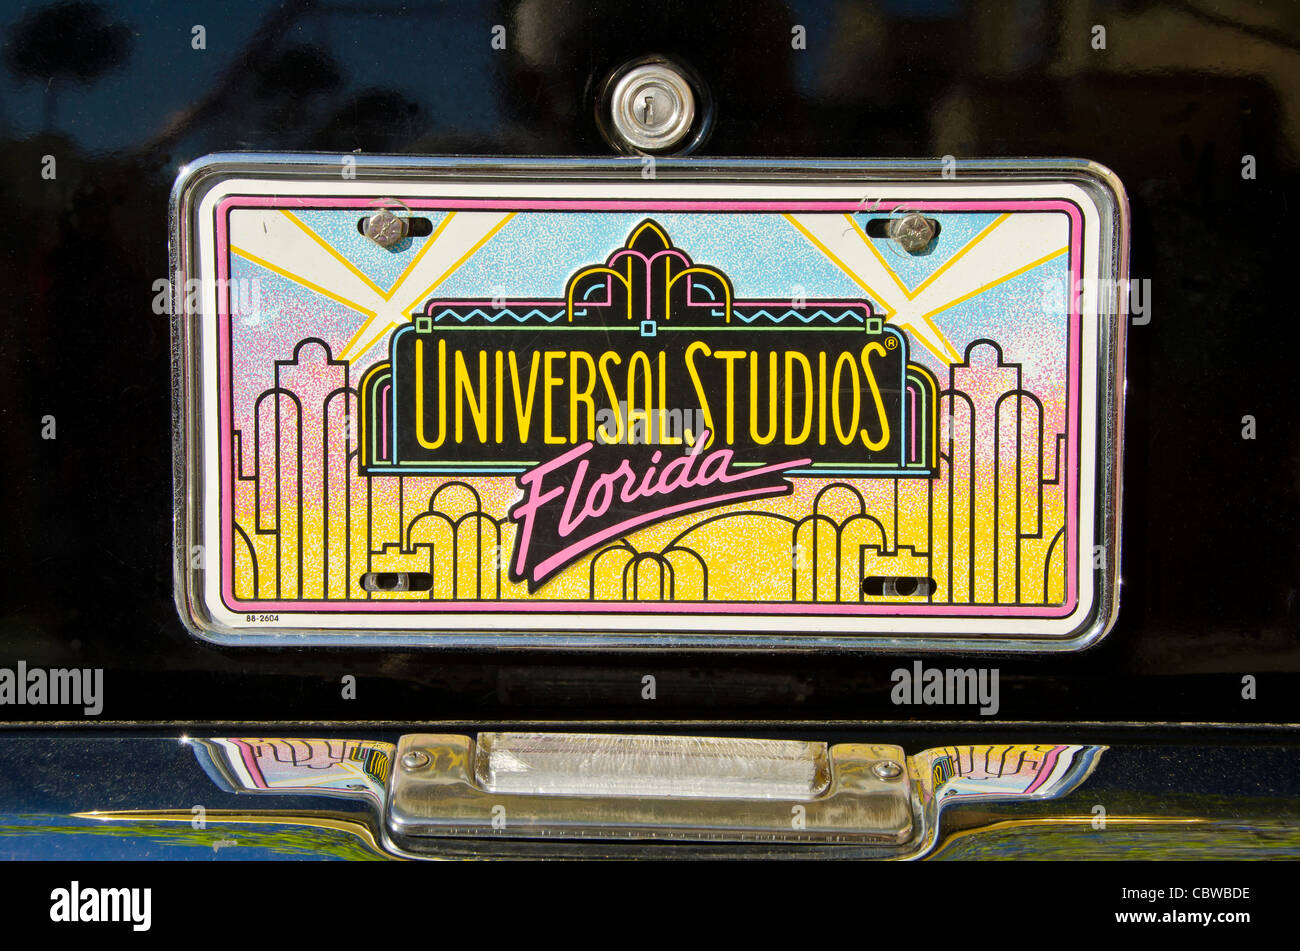 Universal Studios Orlando weathered auto license plate at Universal Studios Orlando Florida Stock Photo